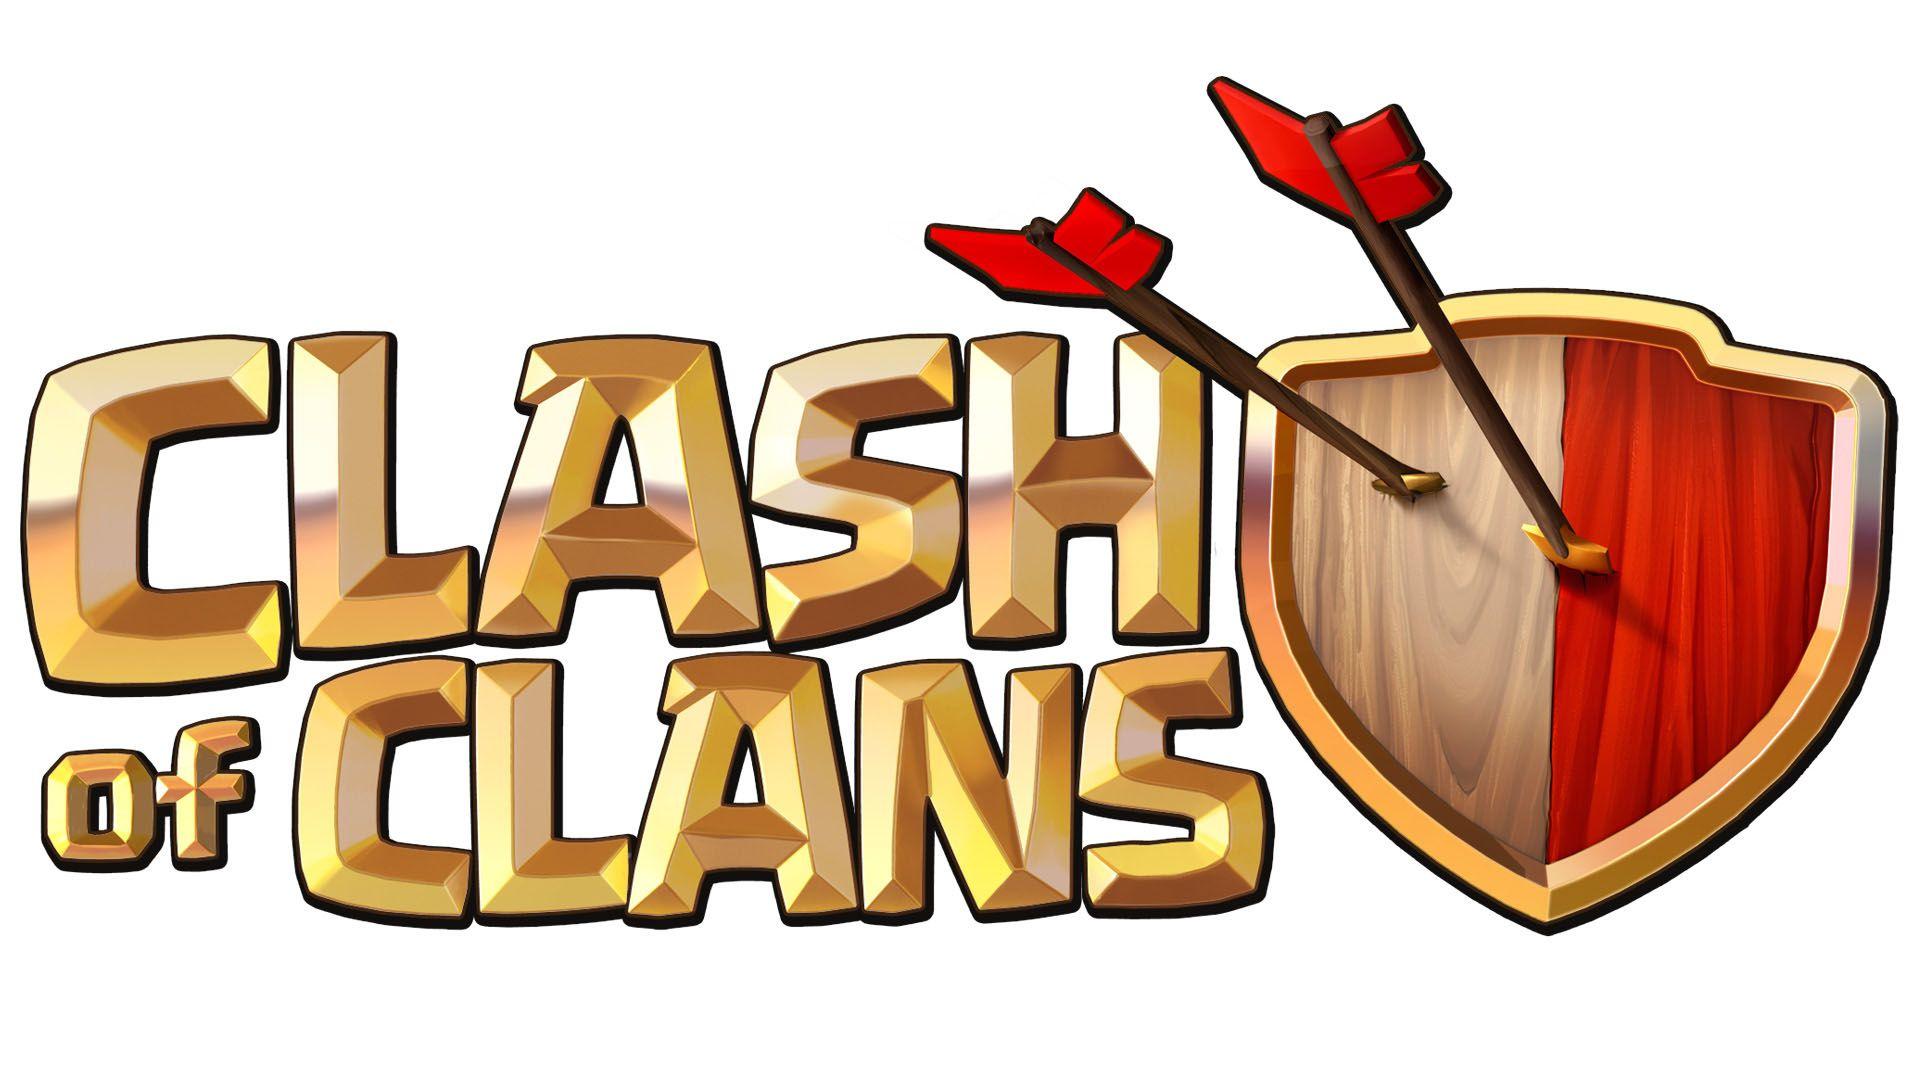 Clash Logo - Clash of Clans Logo Wallpaper 47419 1920x1080px